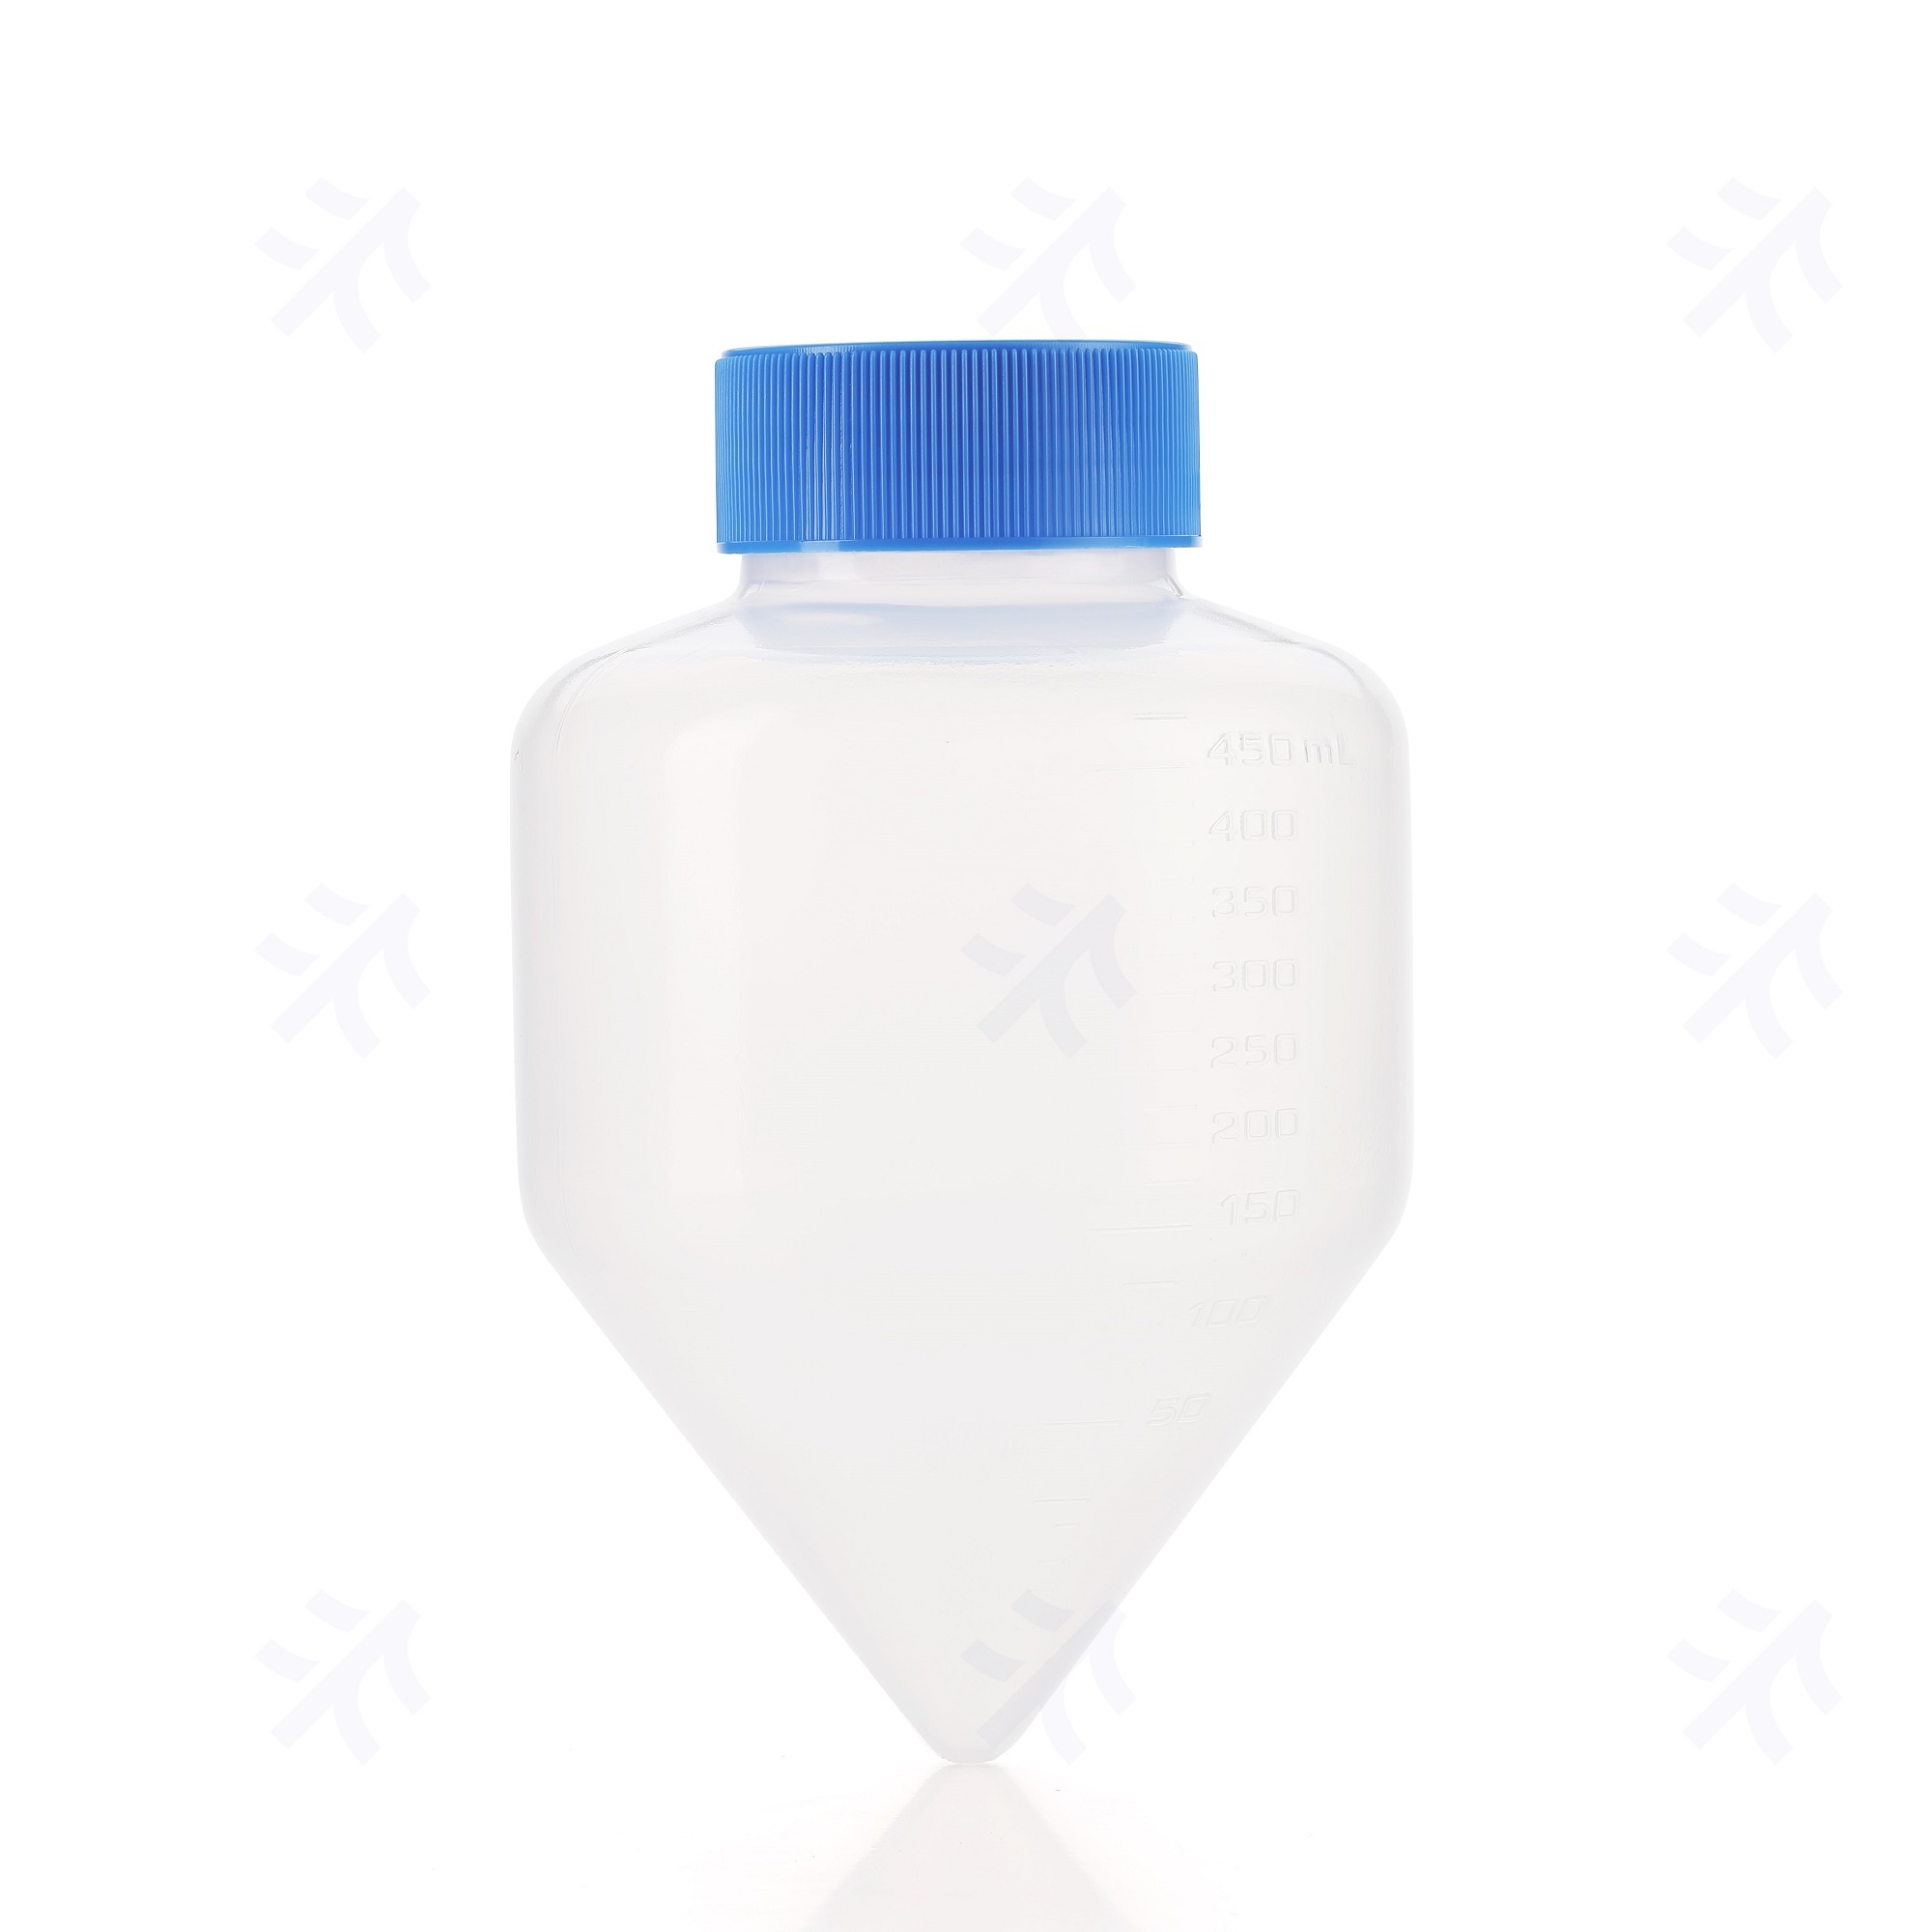 virya  3155006  500ml离心瓶 锥形底  适用于样本离心实验 500离心瓶